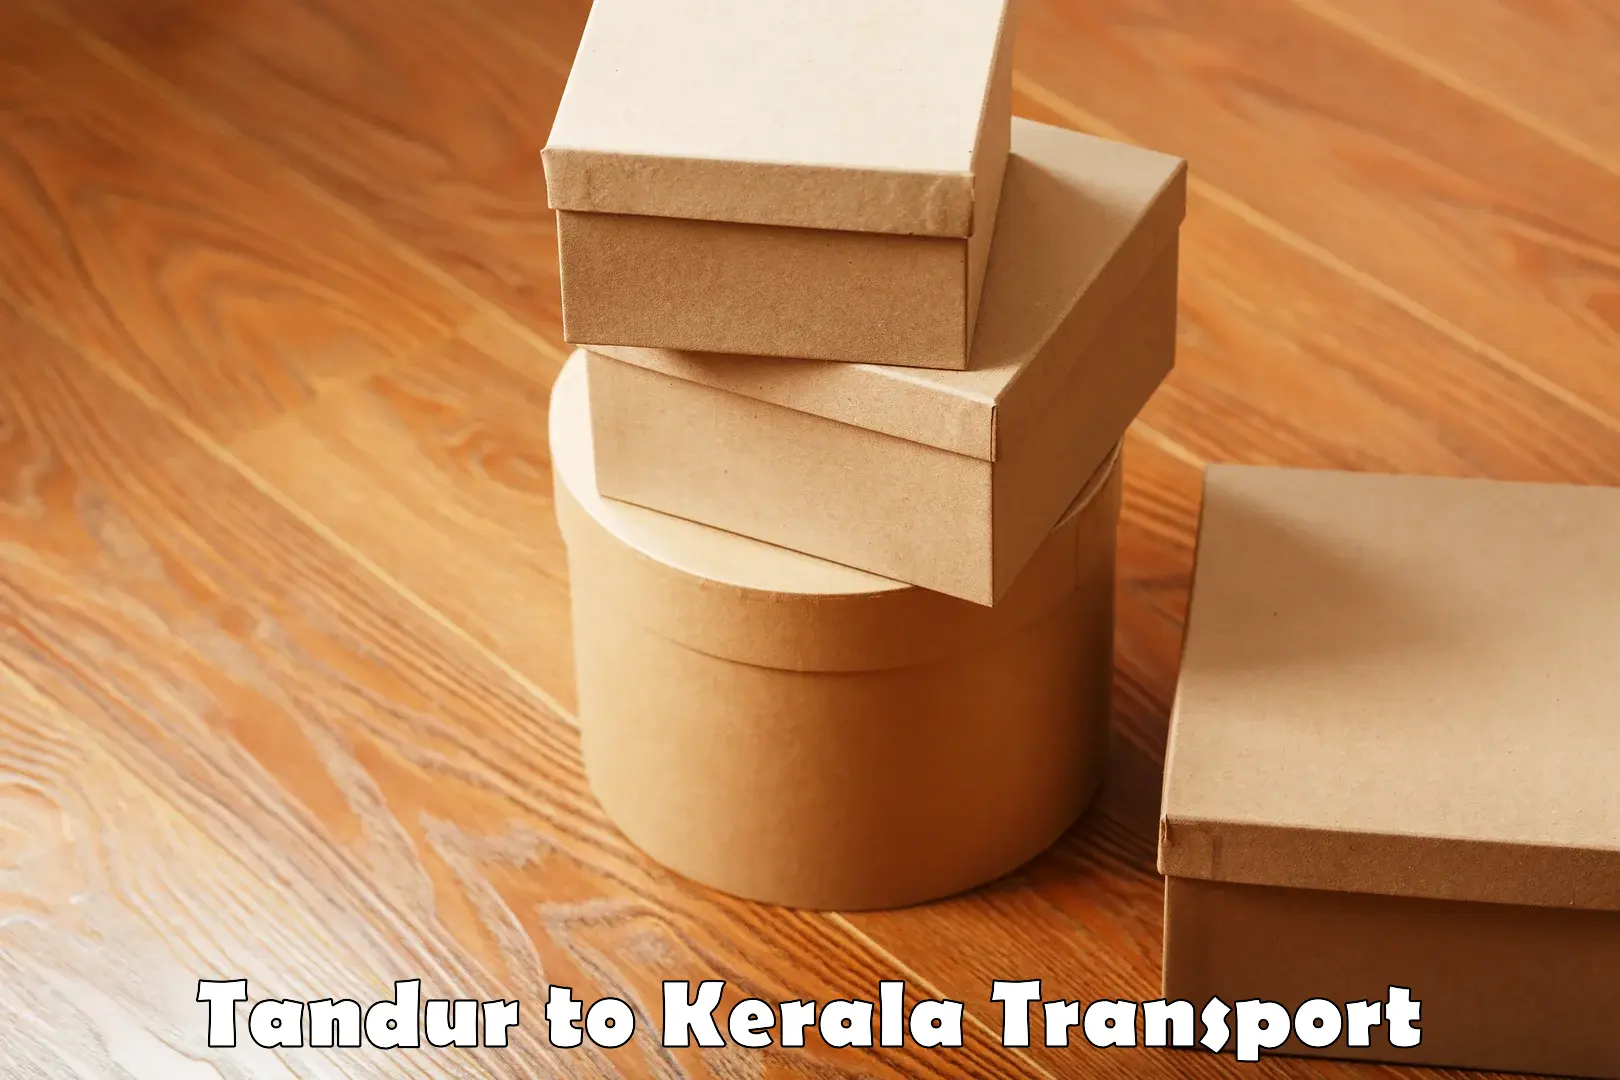 Two wheeler parcel service Tandur to Thrissur